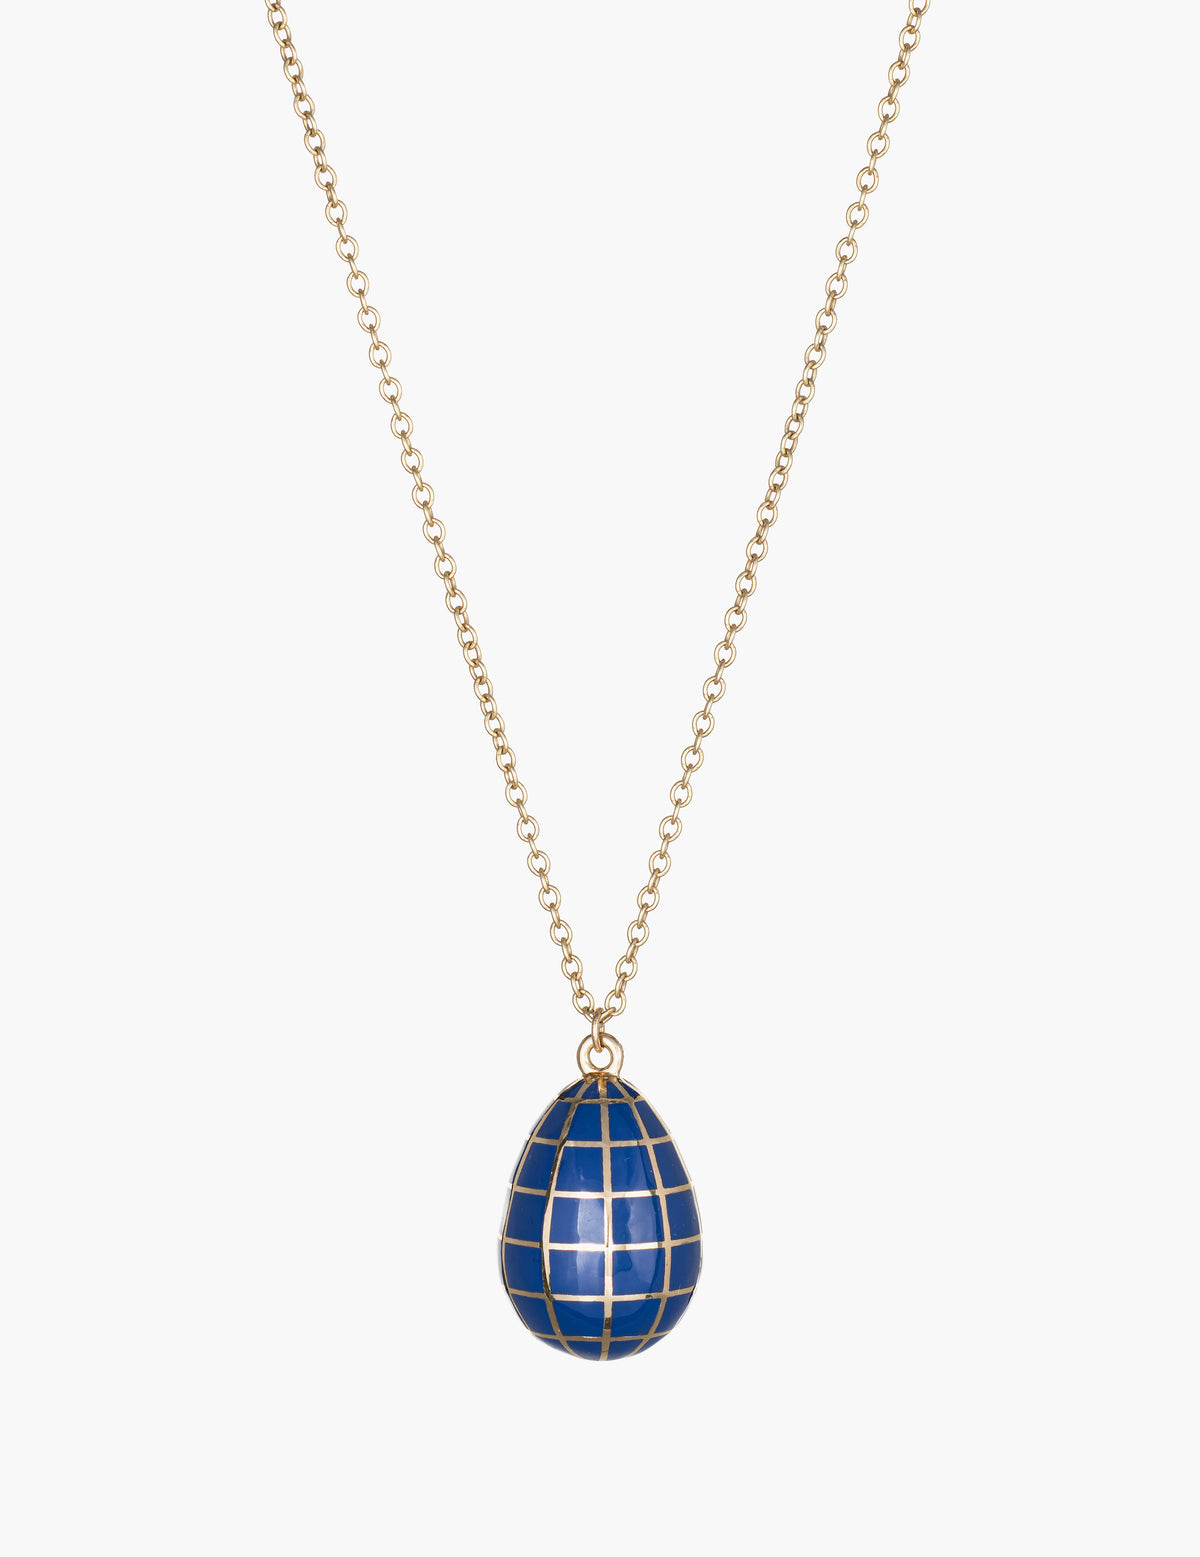 Blue enamel egg pendant